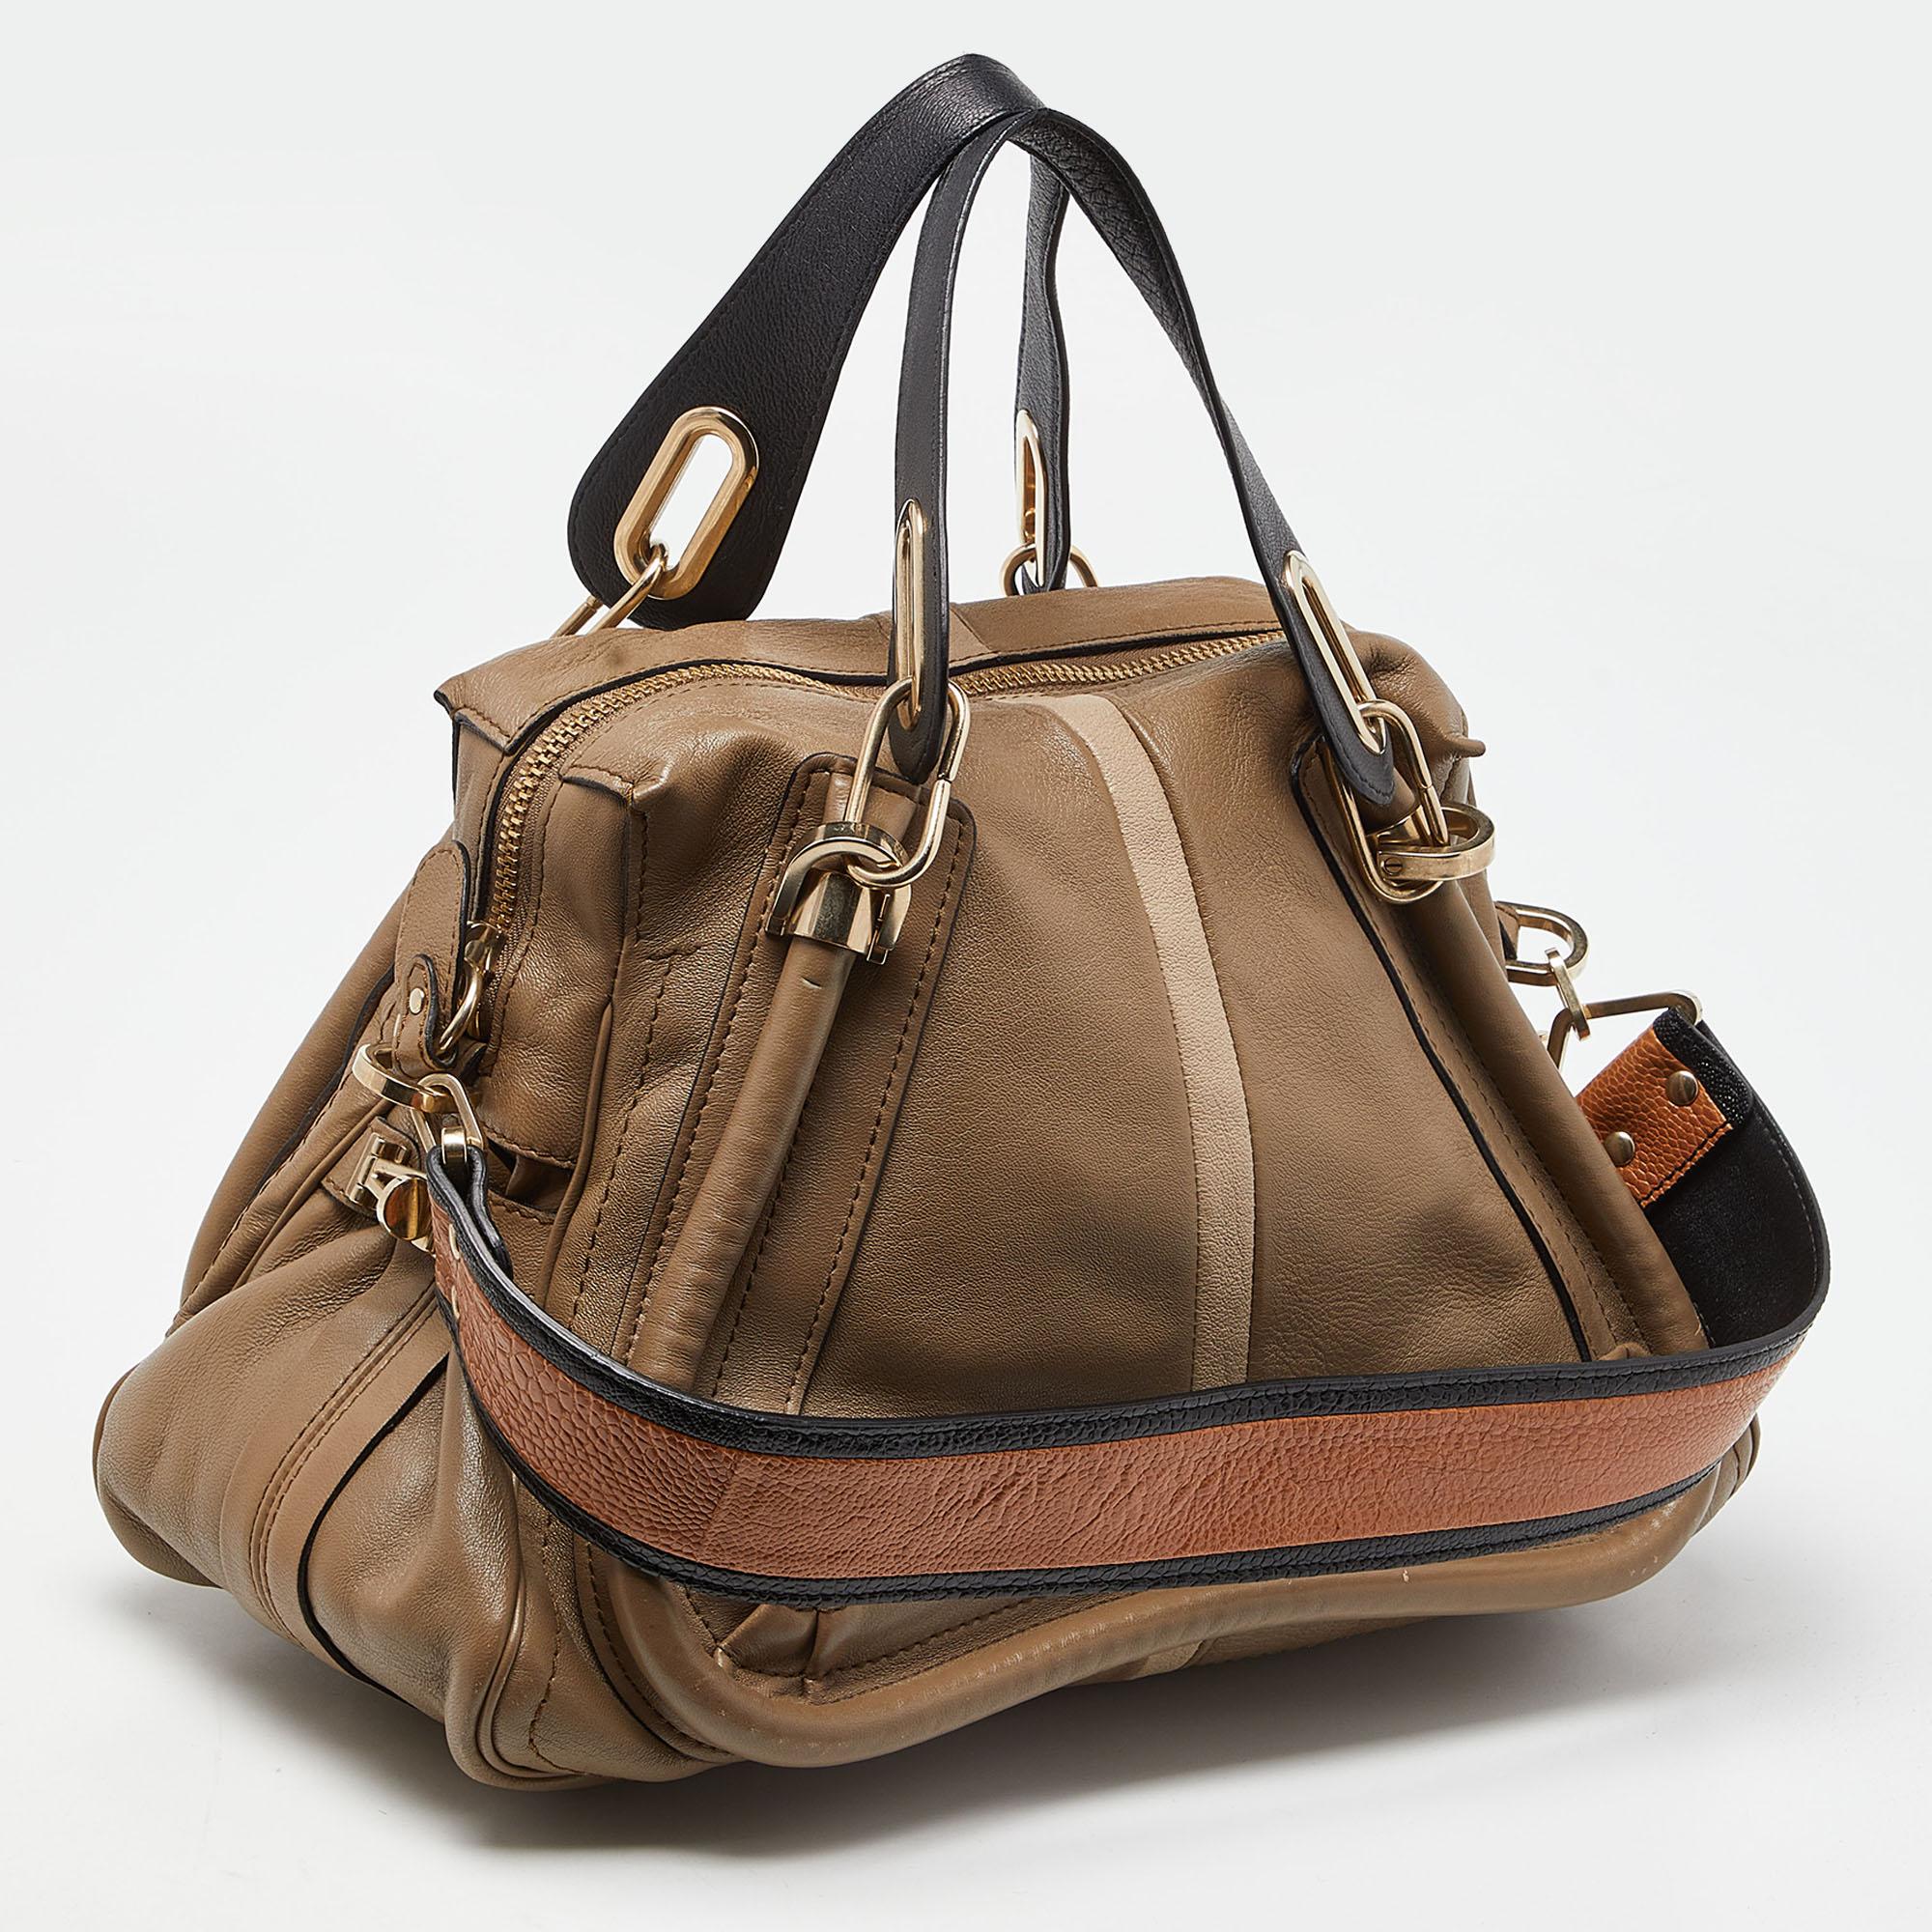 Chloe Beige/Black Leather Medium Paraty Handbag For Sale 8